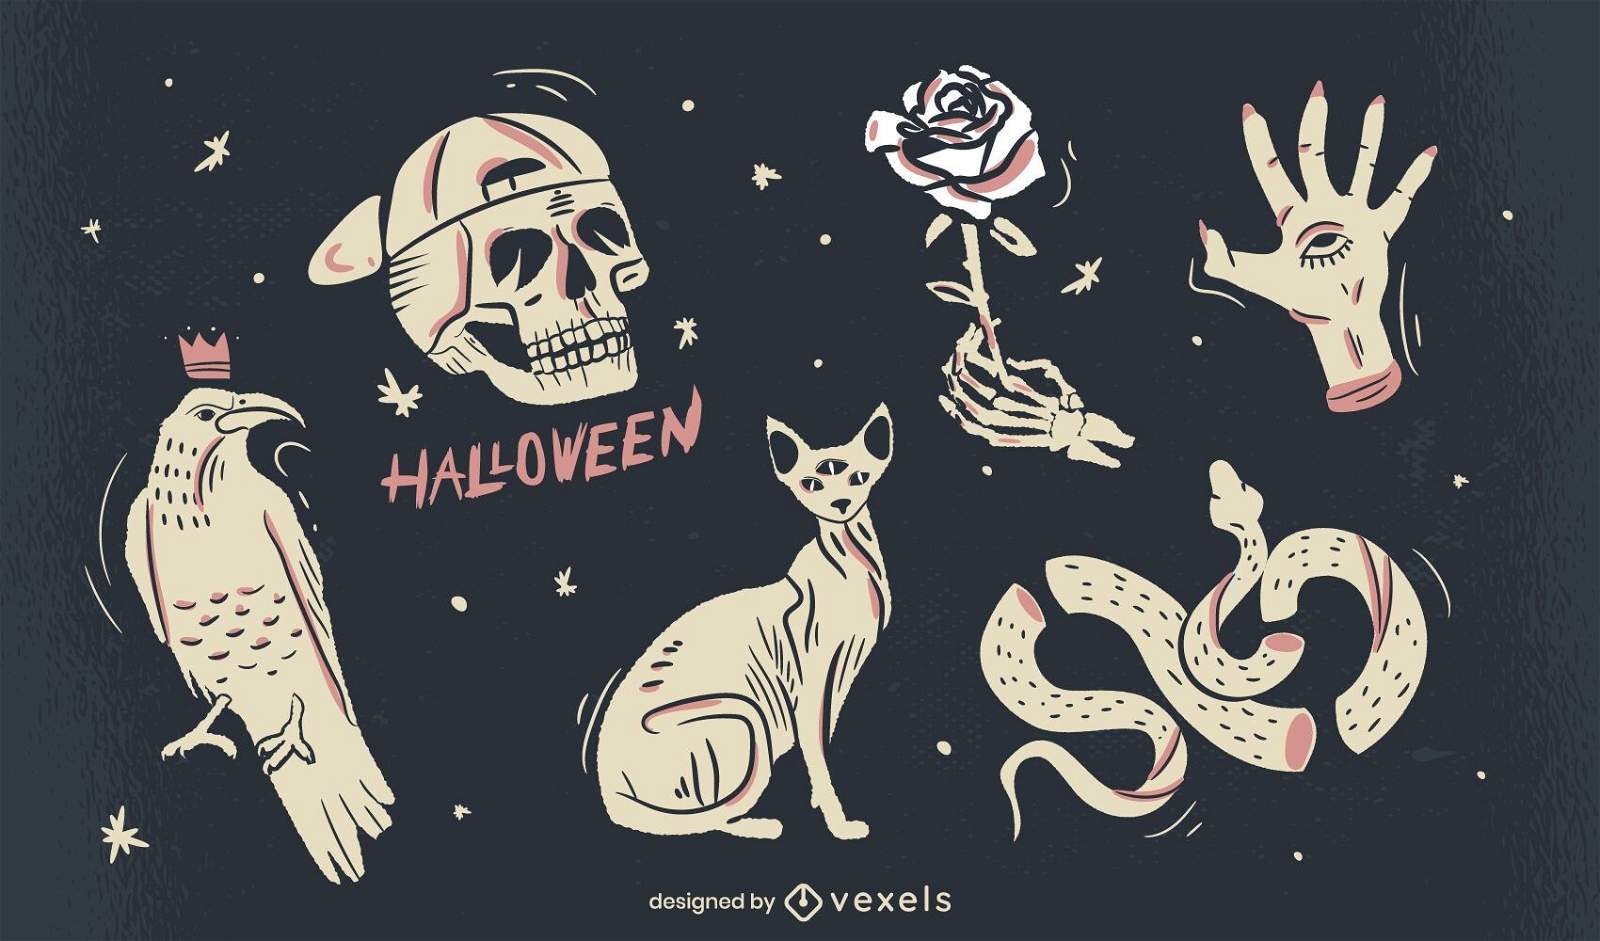 Halloween gruselige Elemente Illustration Set